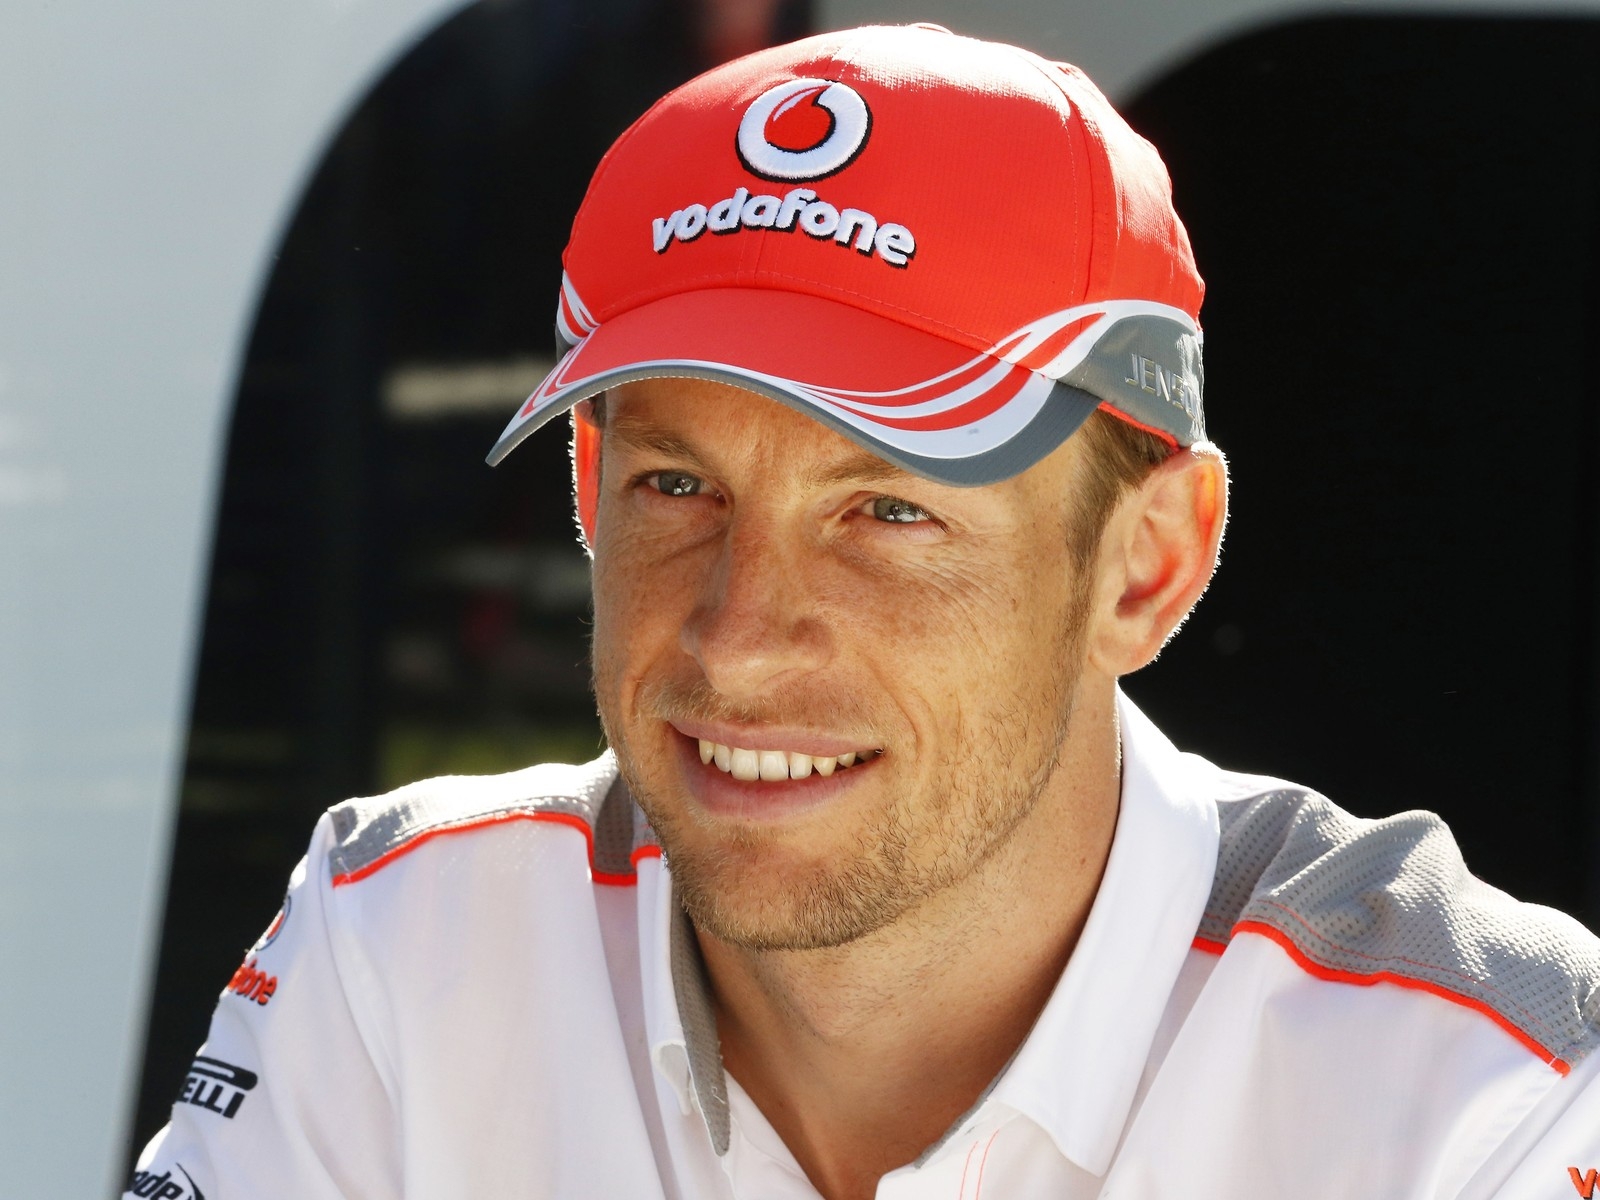 Jenson Button Vodafone for 1600 x 1200 resolution